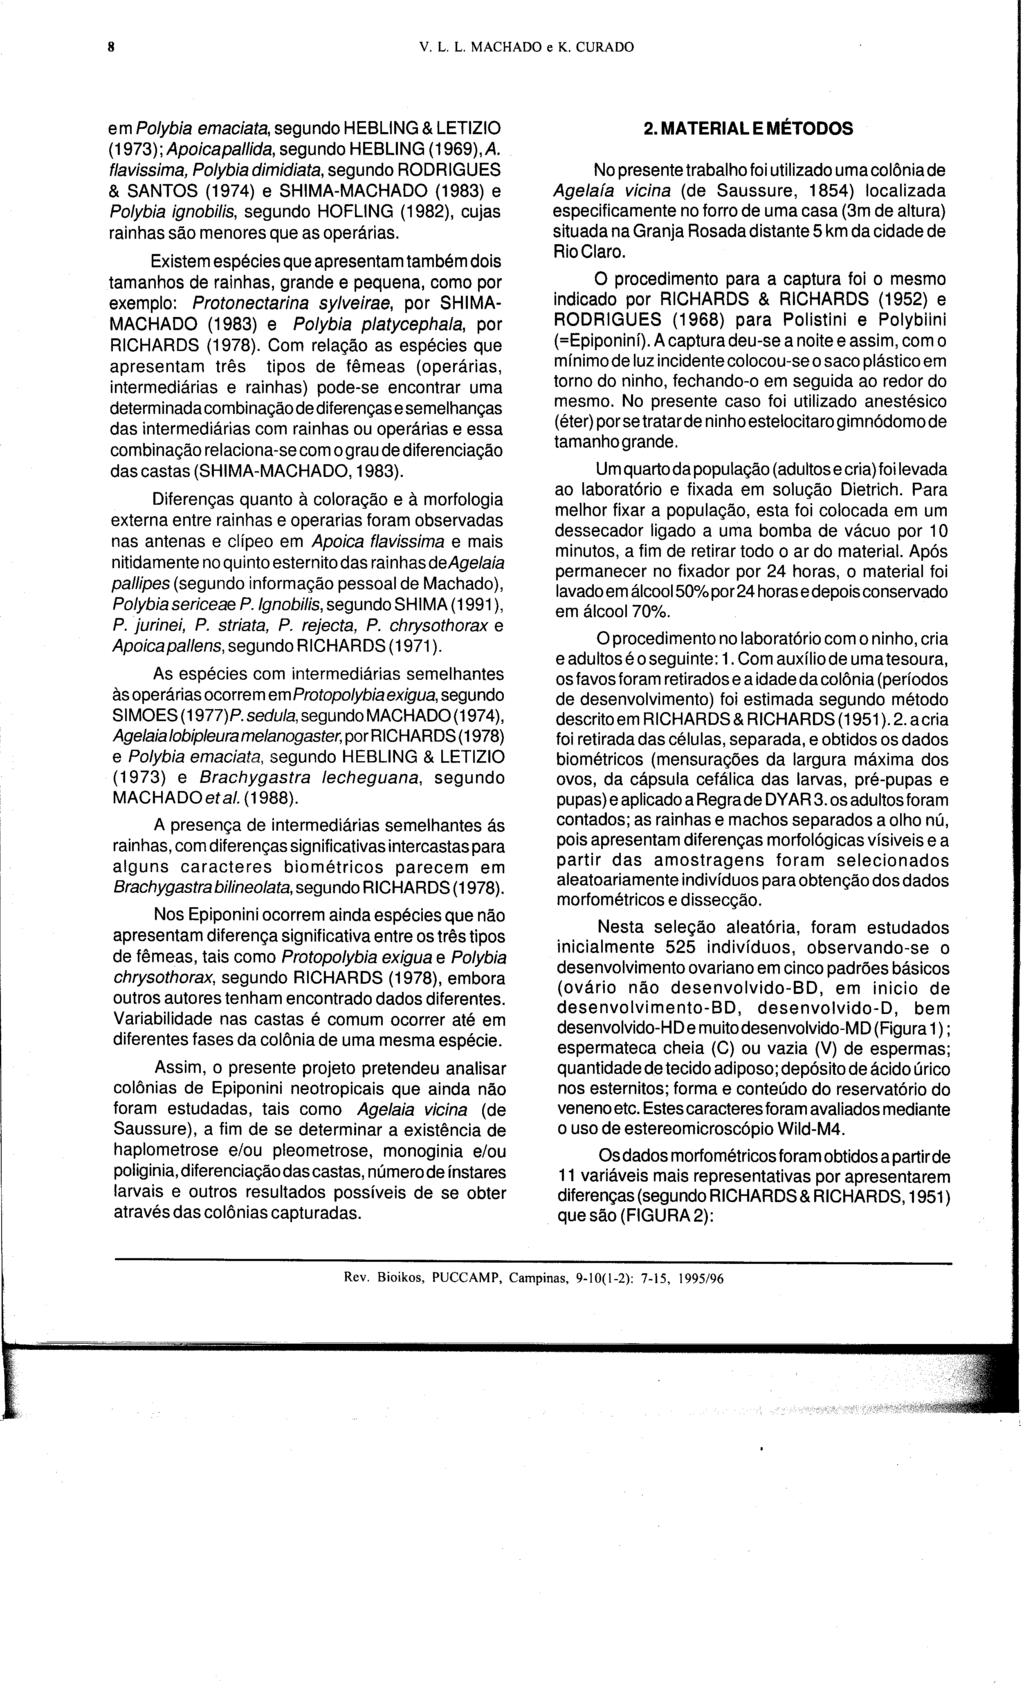 8 V. L. L. MACHADO e K. CURADO em Po/ybia emaciata segundo HEBLlNG&LETIZIO (1973); Apoicapallida segundo HEBLlNG(1969) A.